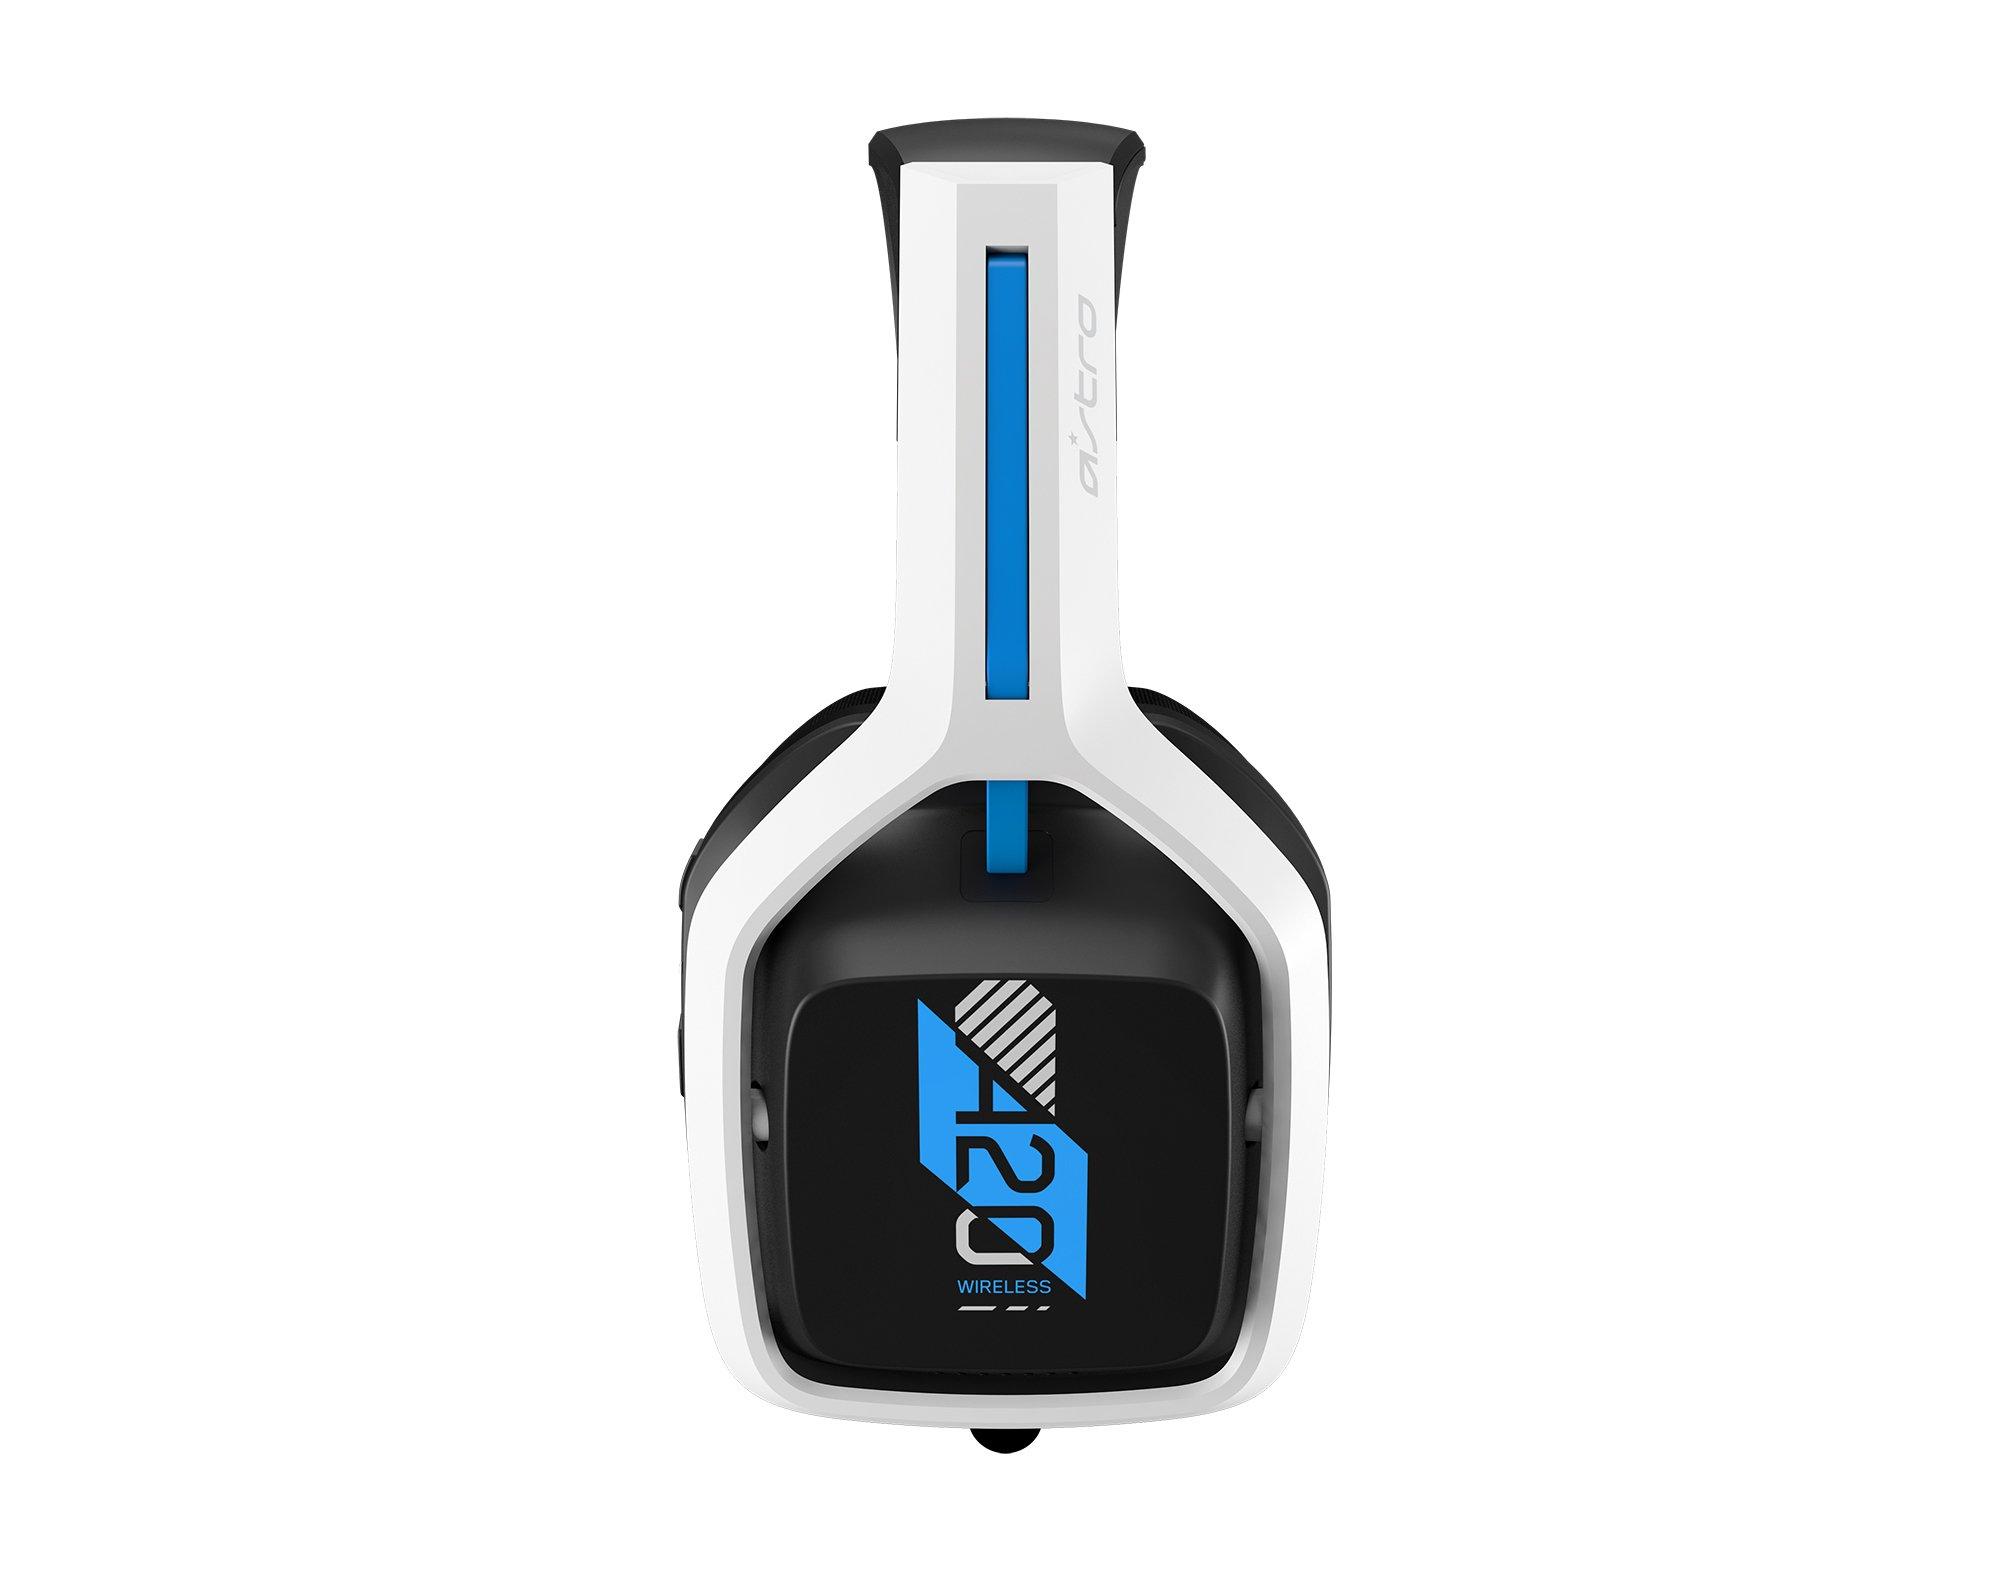  Logitech astro A20 Wireless Headset Black/Blue - Playstation  4/PC/MAC (Renewed) : Video Games